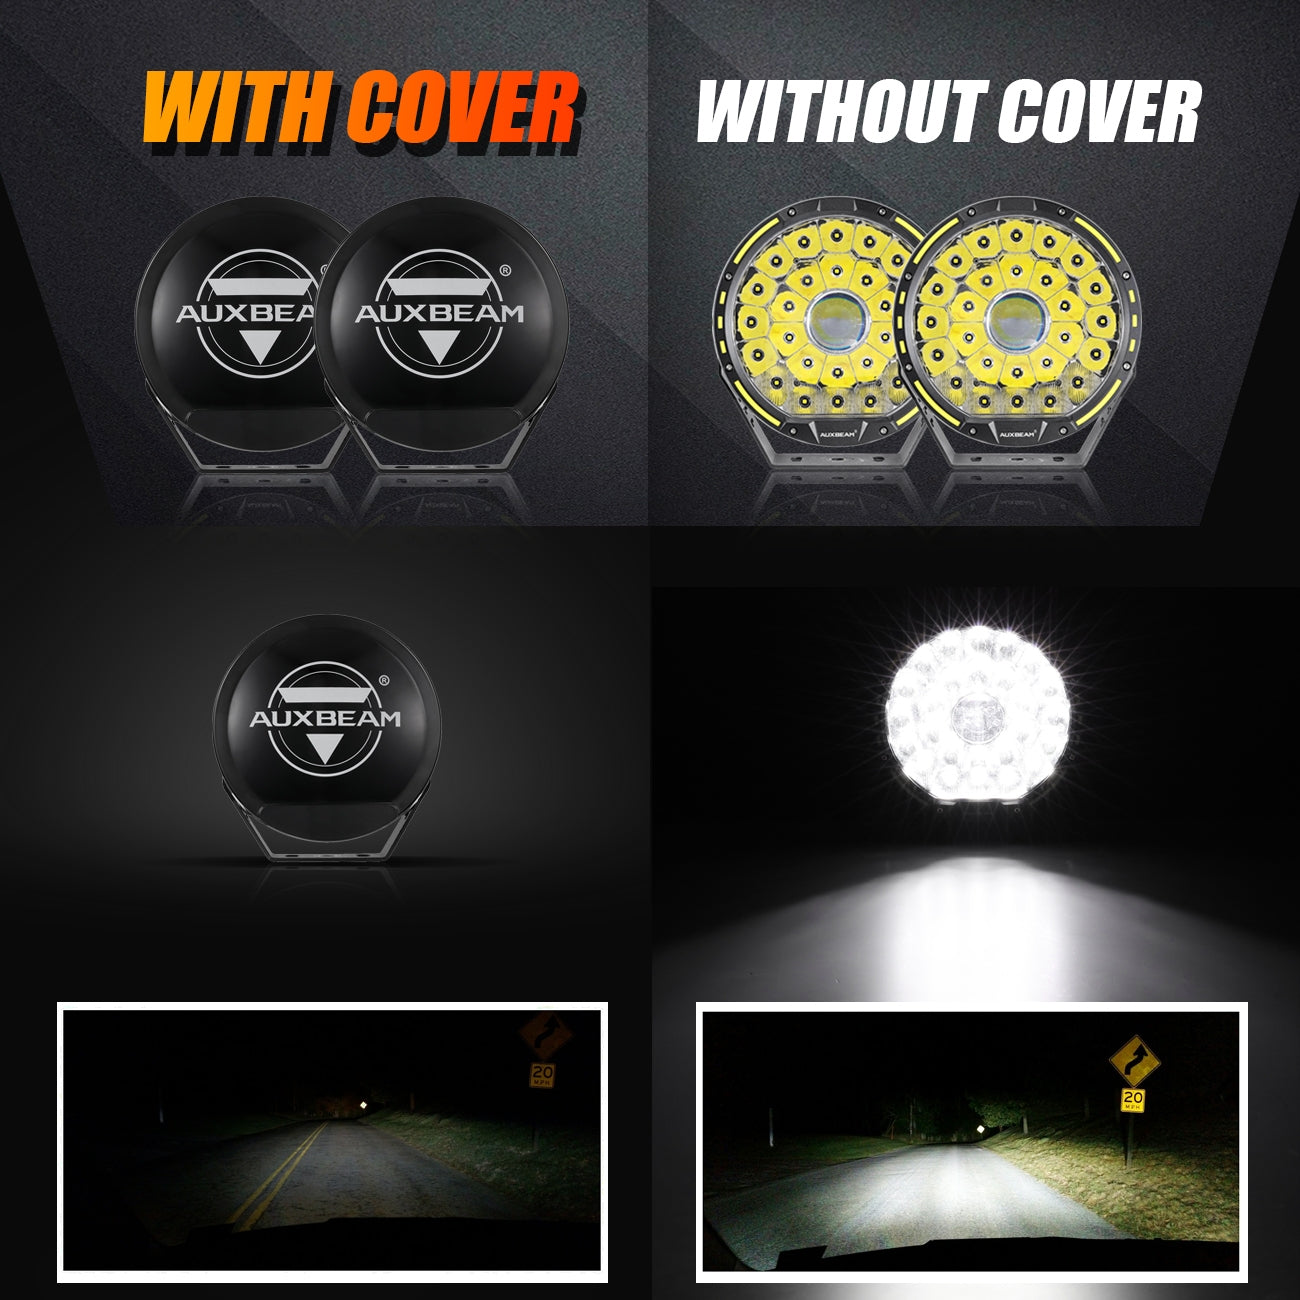 (2pcs/set) 9 INCH 270W 37776LM 360-PRO Series LED Driving Lights+Amber/Black Covers(Optional) for ATV UTV SIDE BY SIDE 4X4